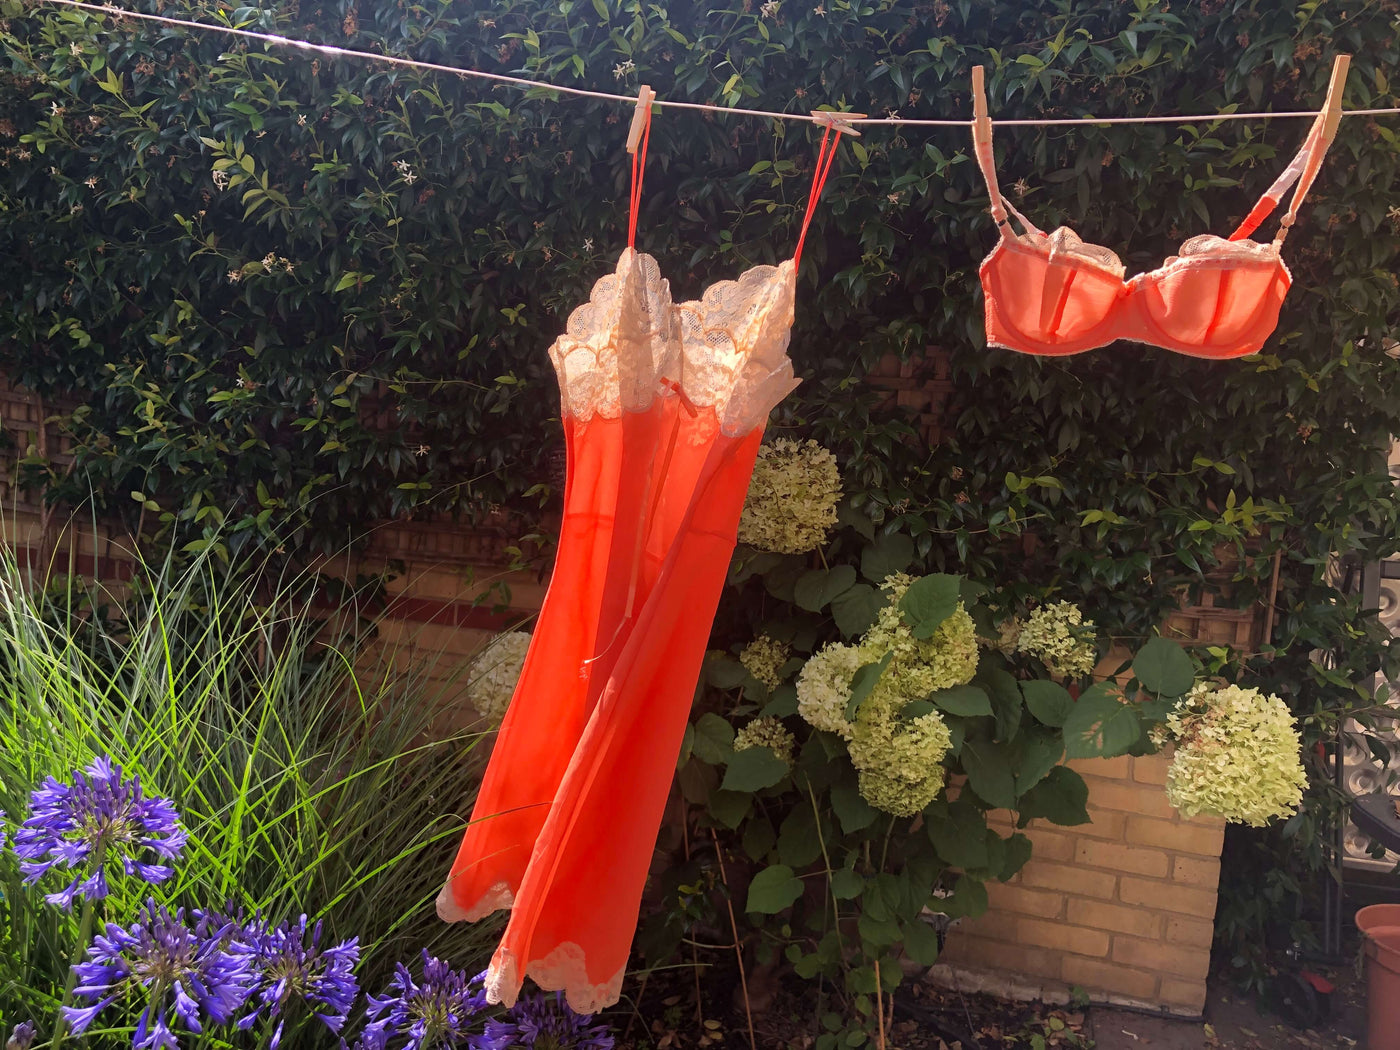 Orange chiffon Janet Reger dress with bra